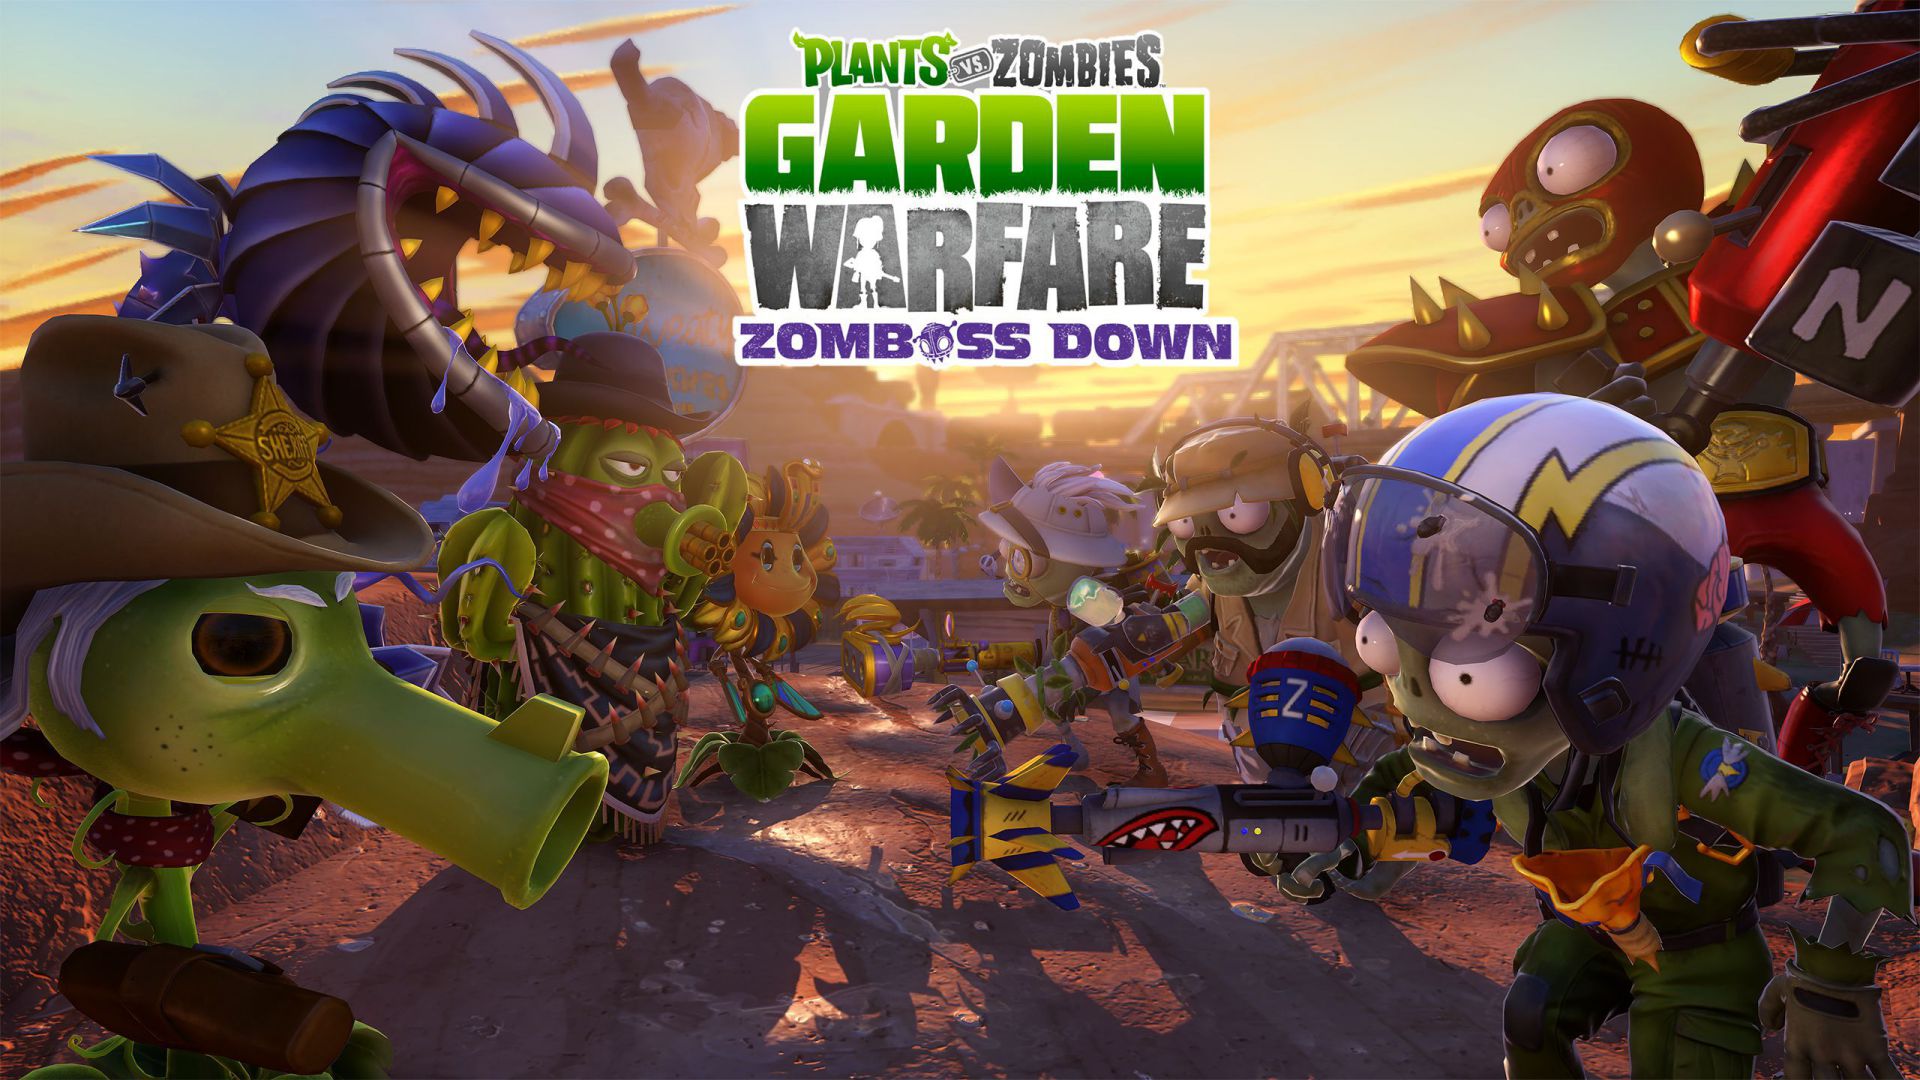 Plants vs Zombies Garden Warfare Review